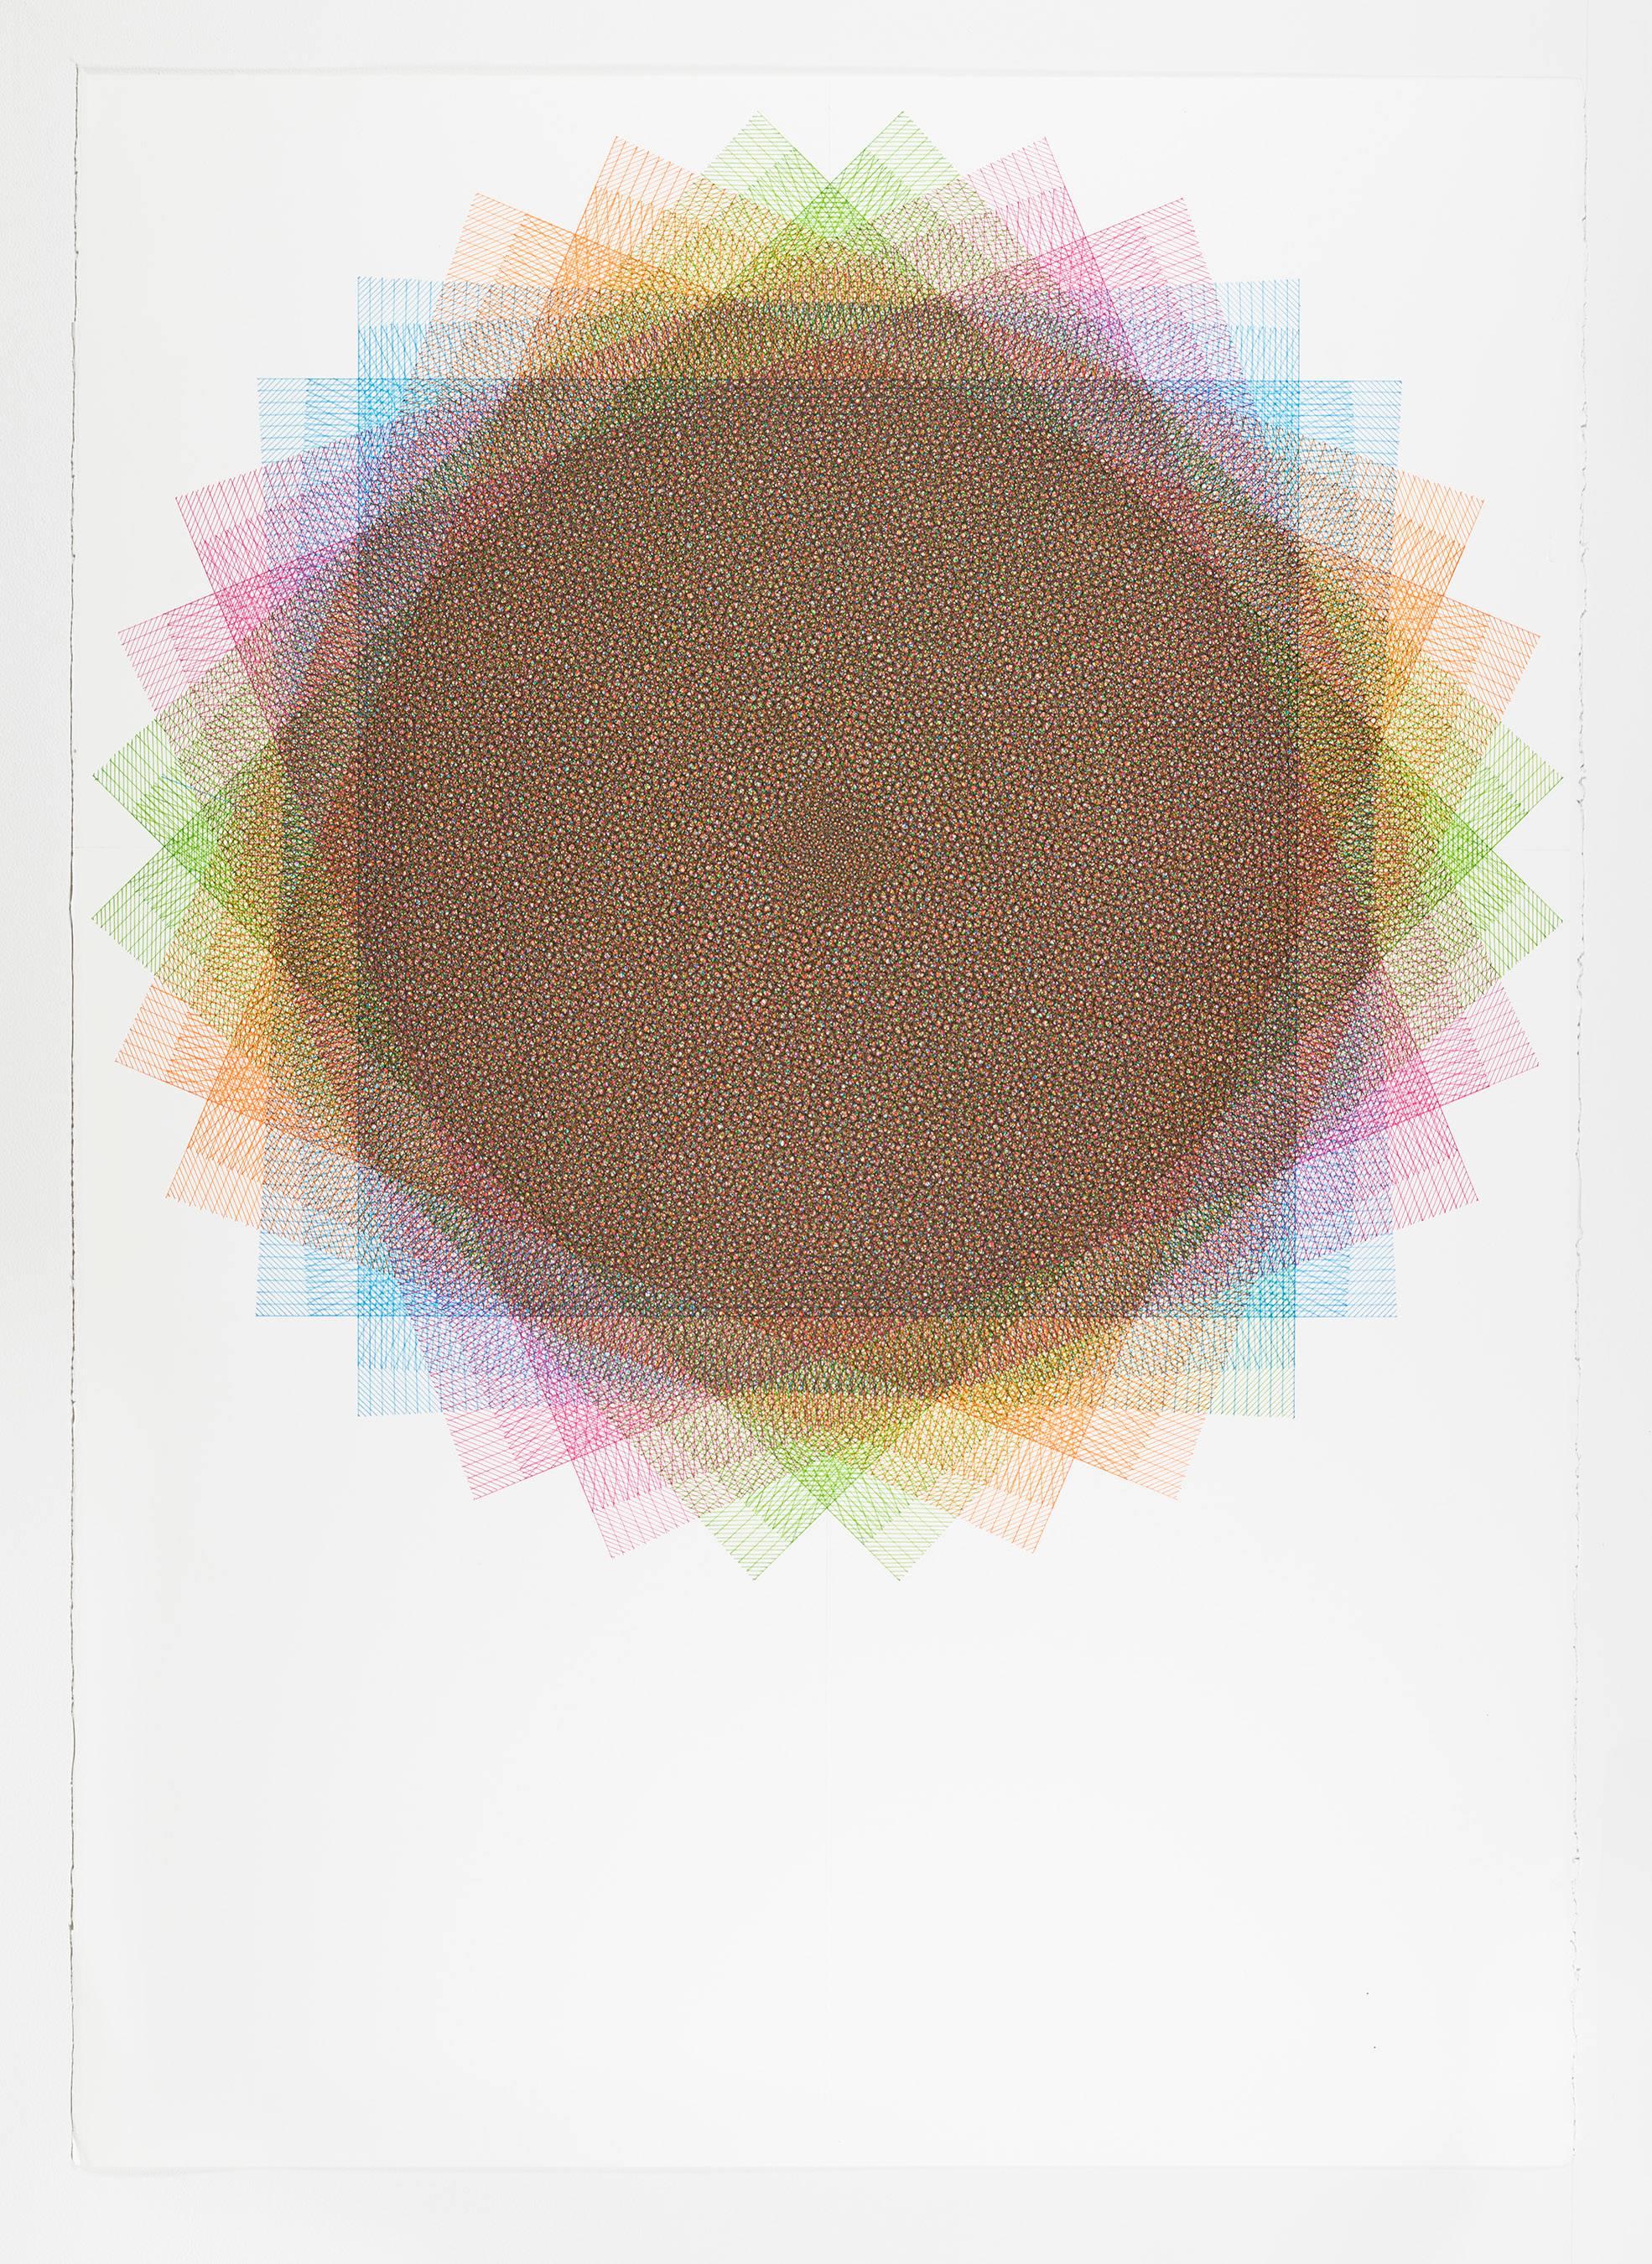 Sara Eichner, 32 Layers, 4 Colors, 2017, Minimalist Op-Art,  Ink, Pen